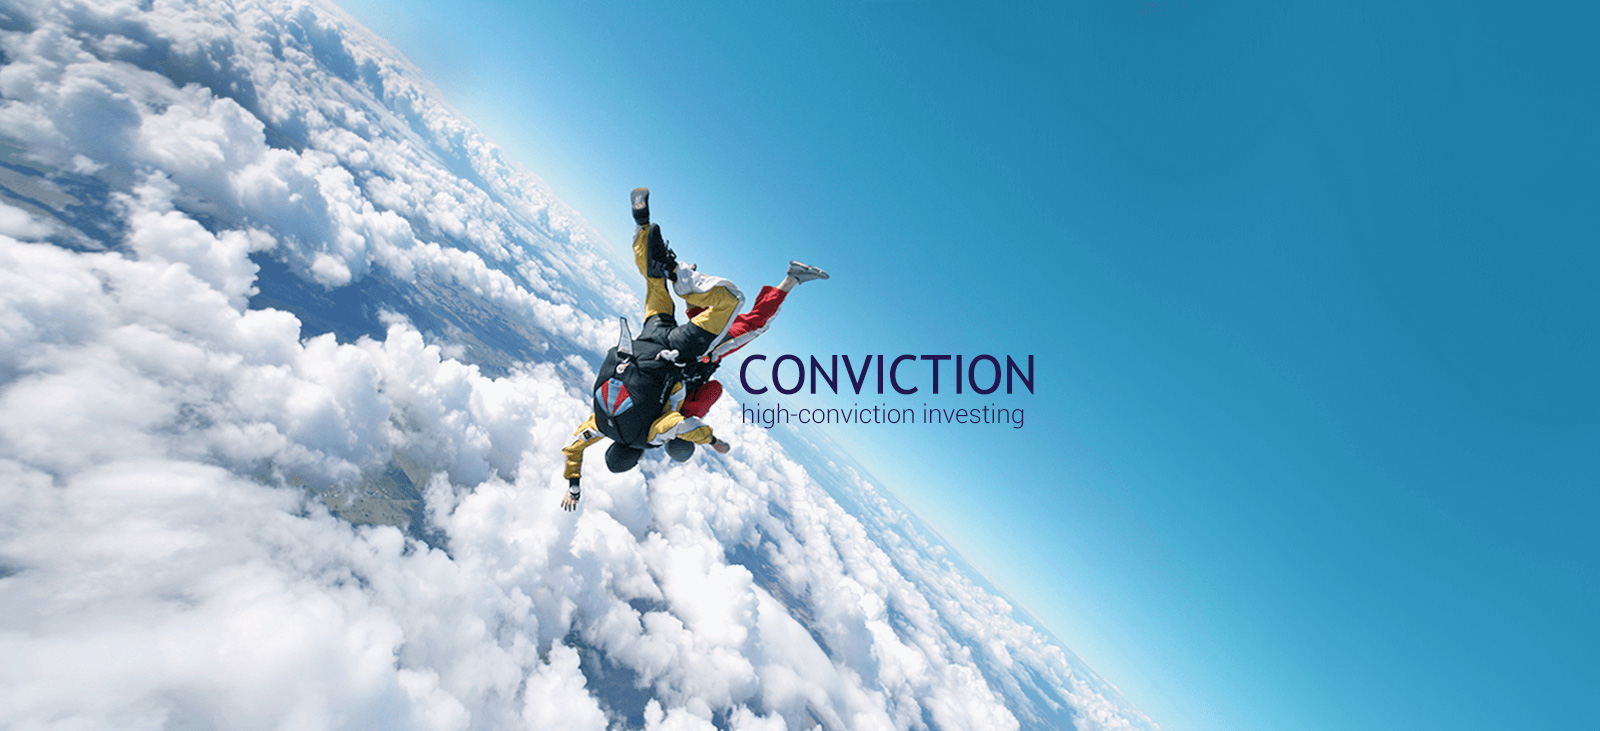 Conviction - high-conviction investing